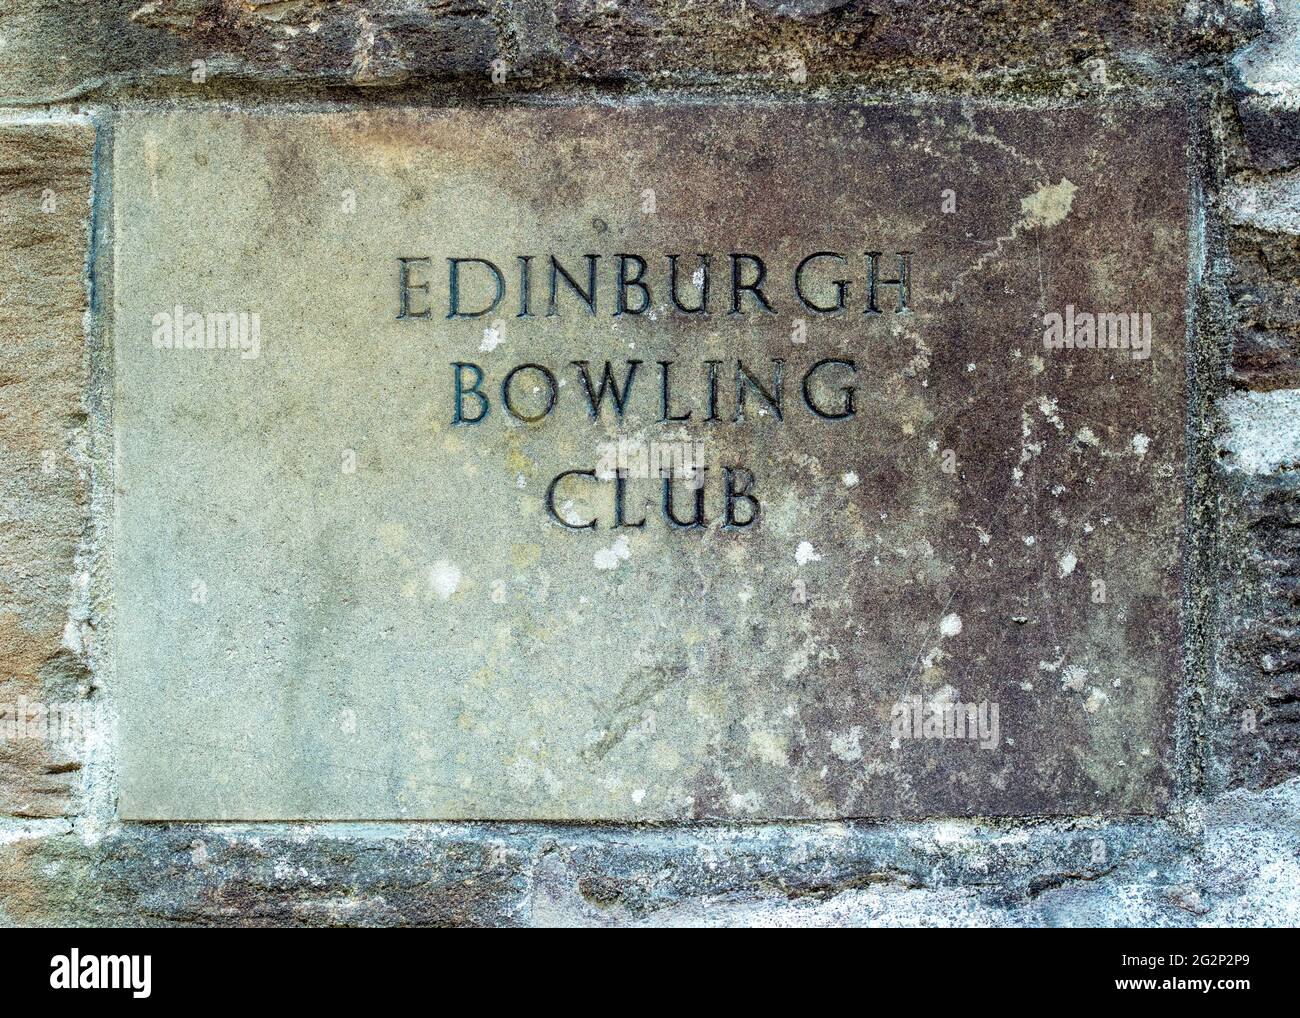 Edinburgh Bowling Club sign, Edinburgh, Scotland, UK Stock Photo